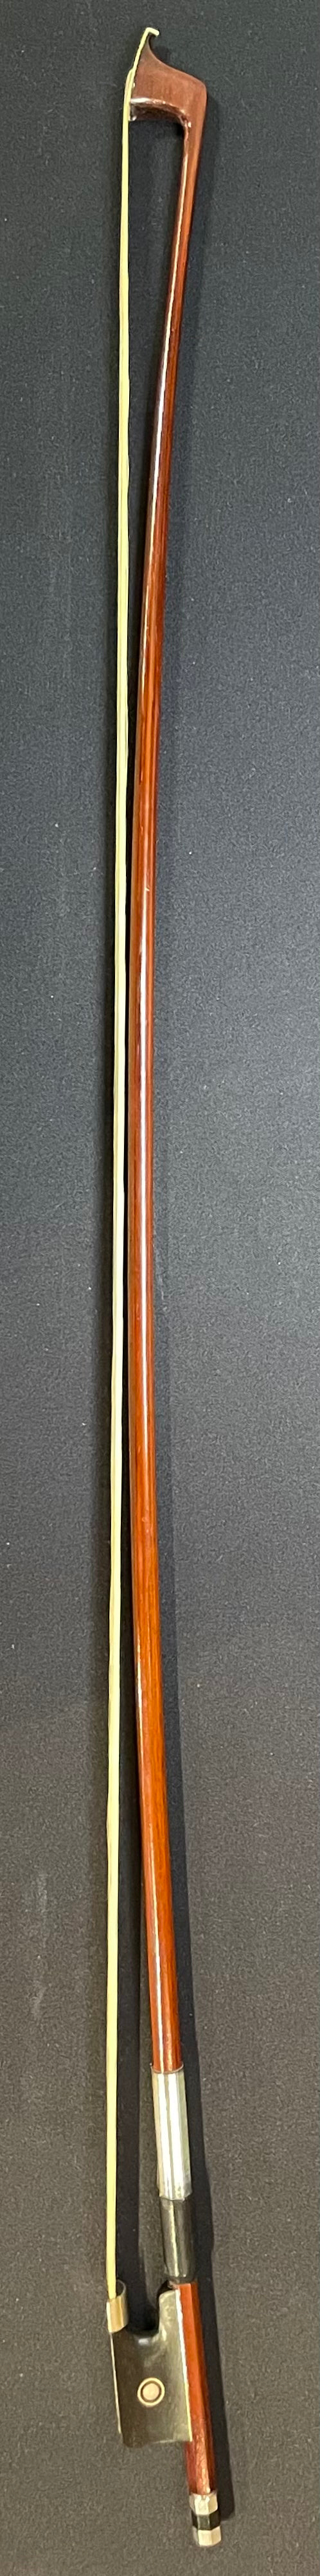 Full Size Viola Bow - A. Schmidt Original Wood Model